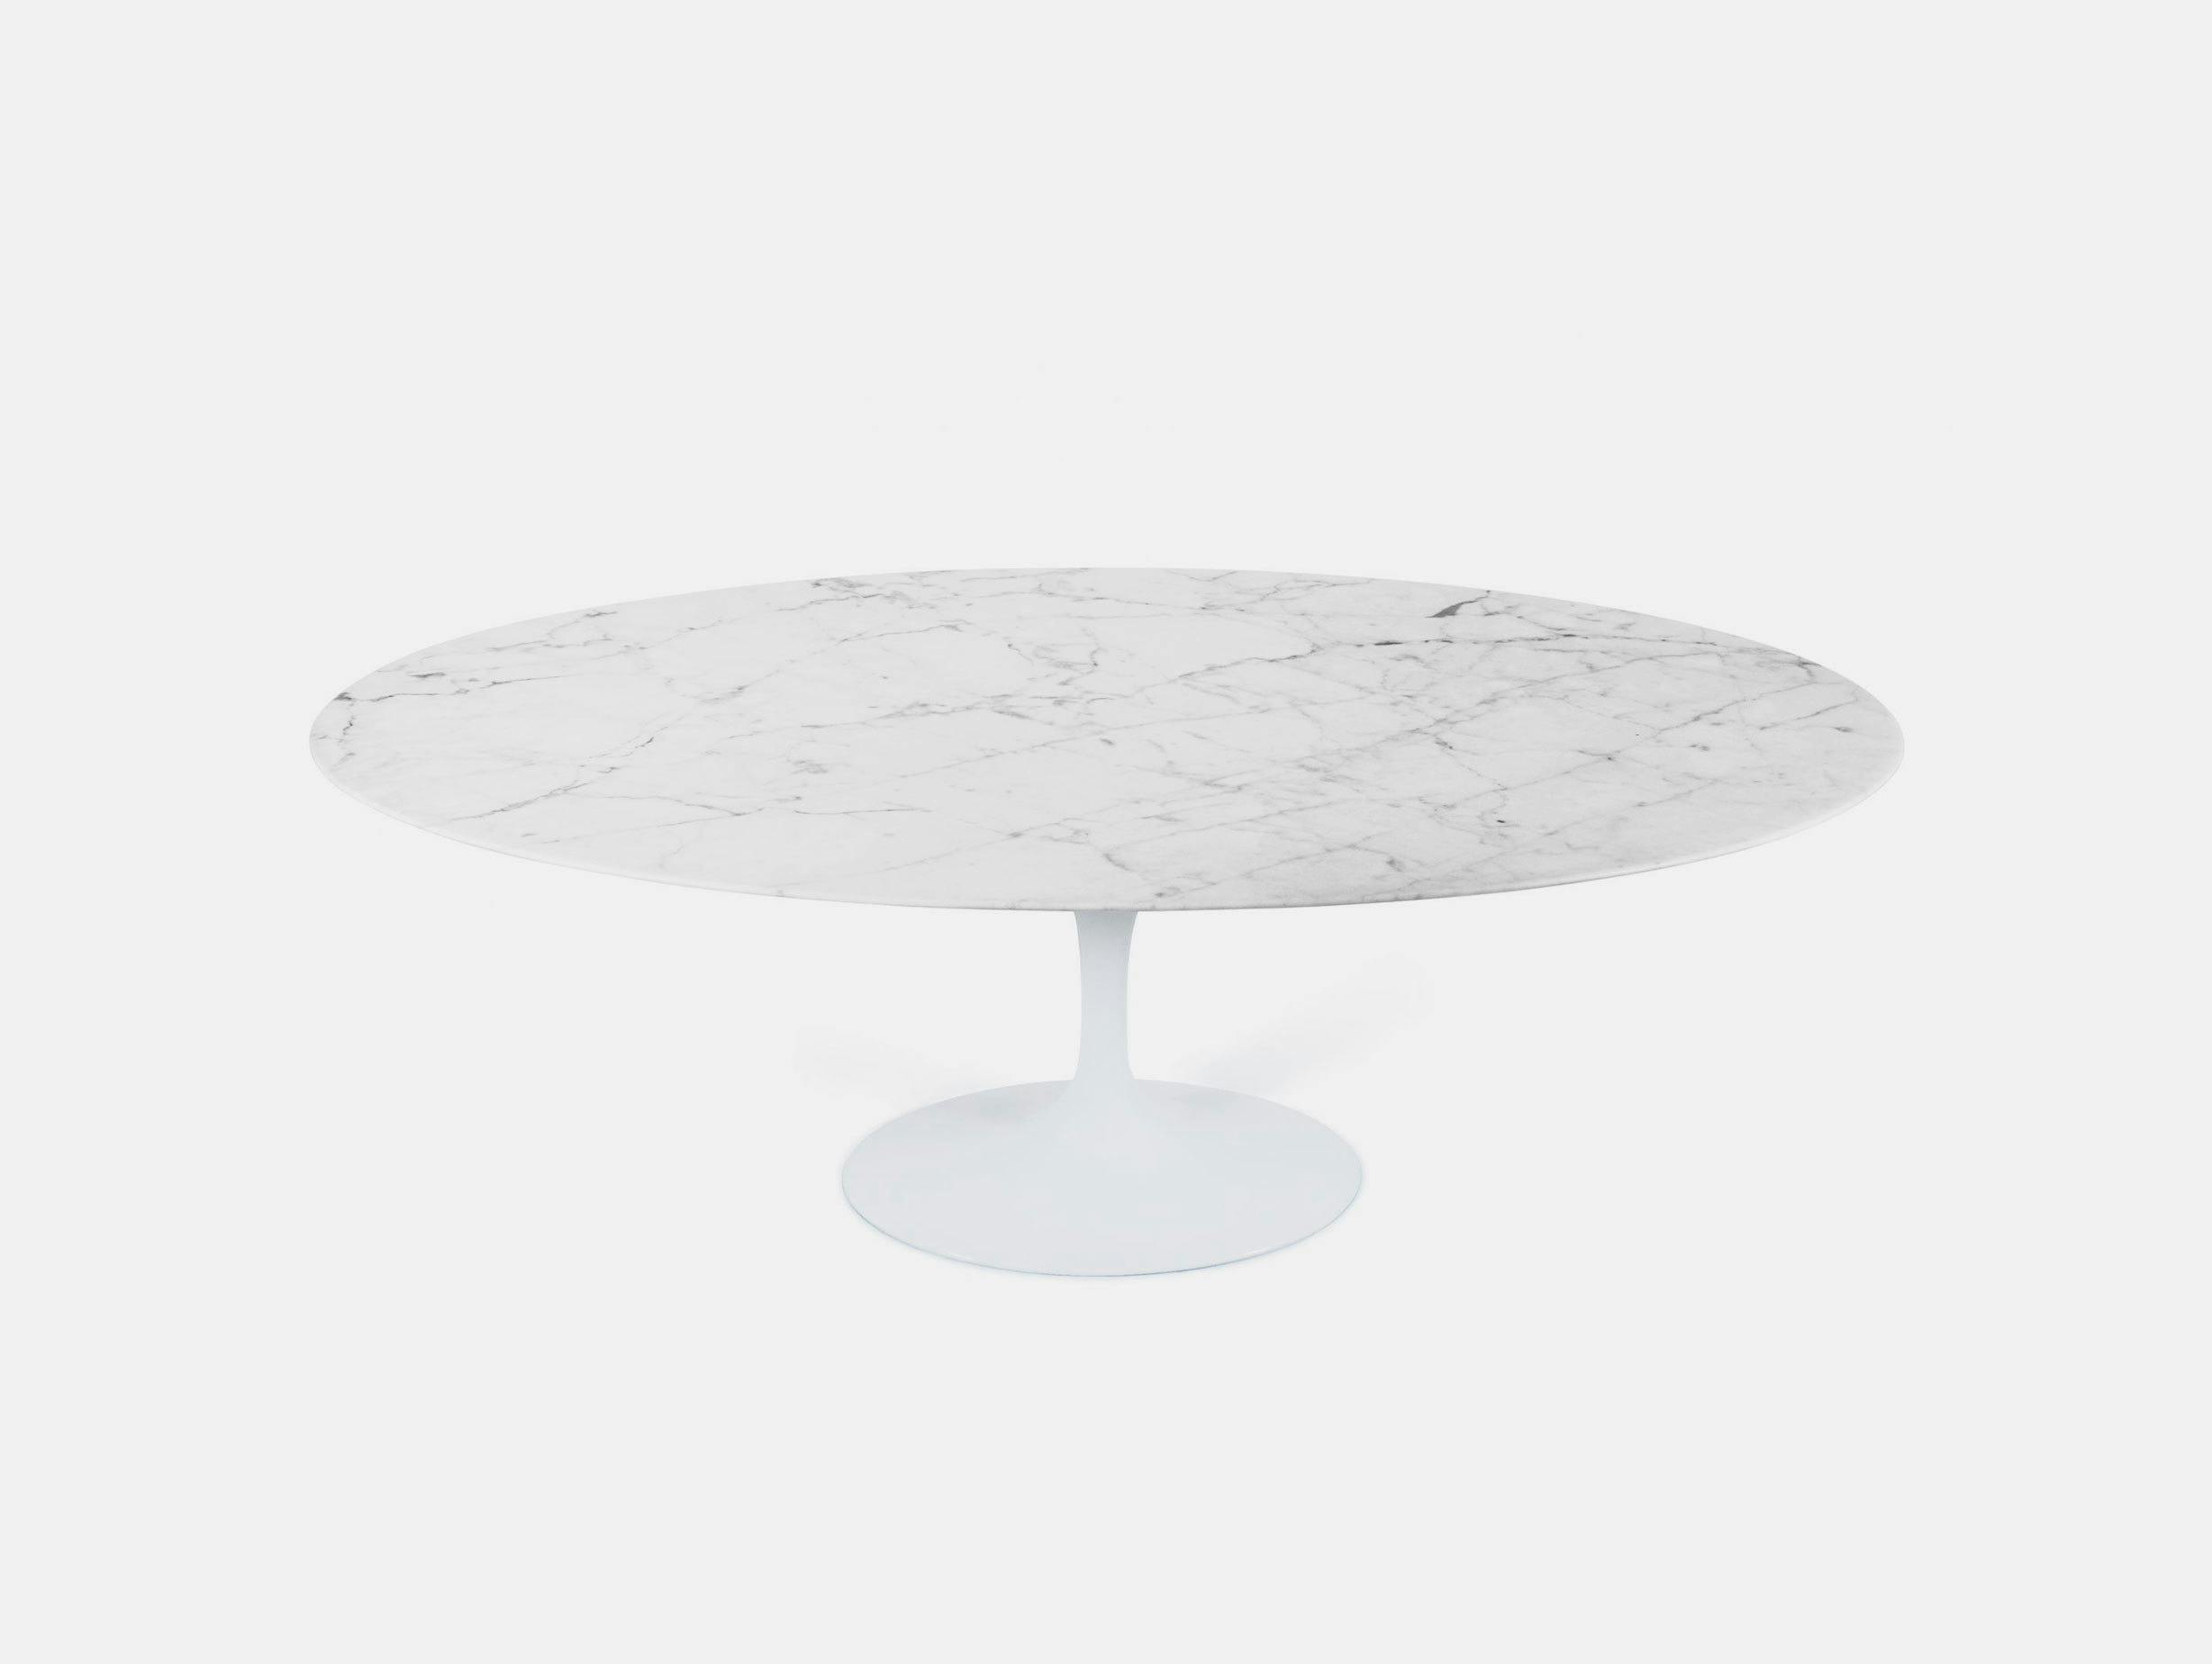 Knoll Saarinen Oval Dining Table